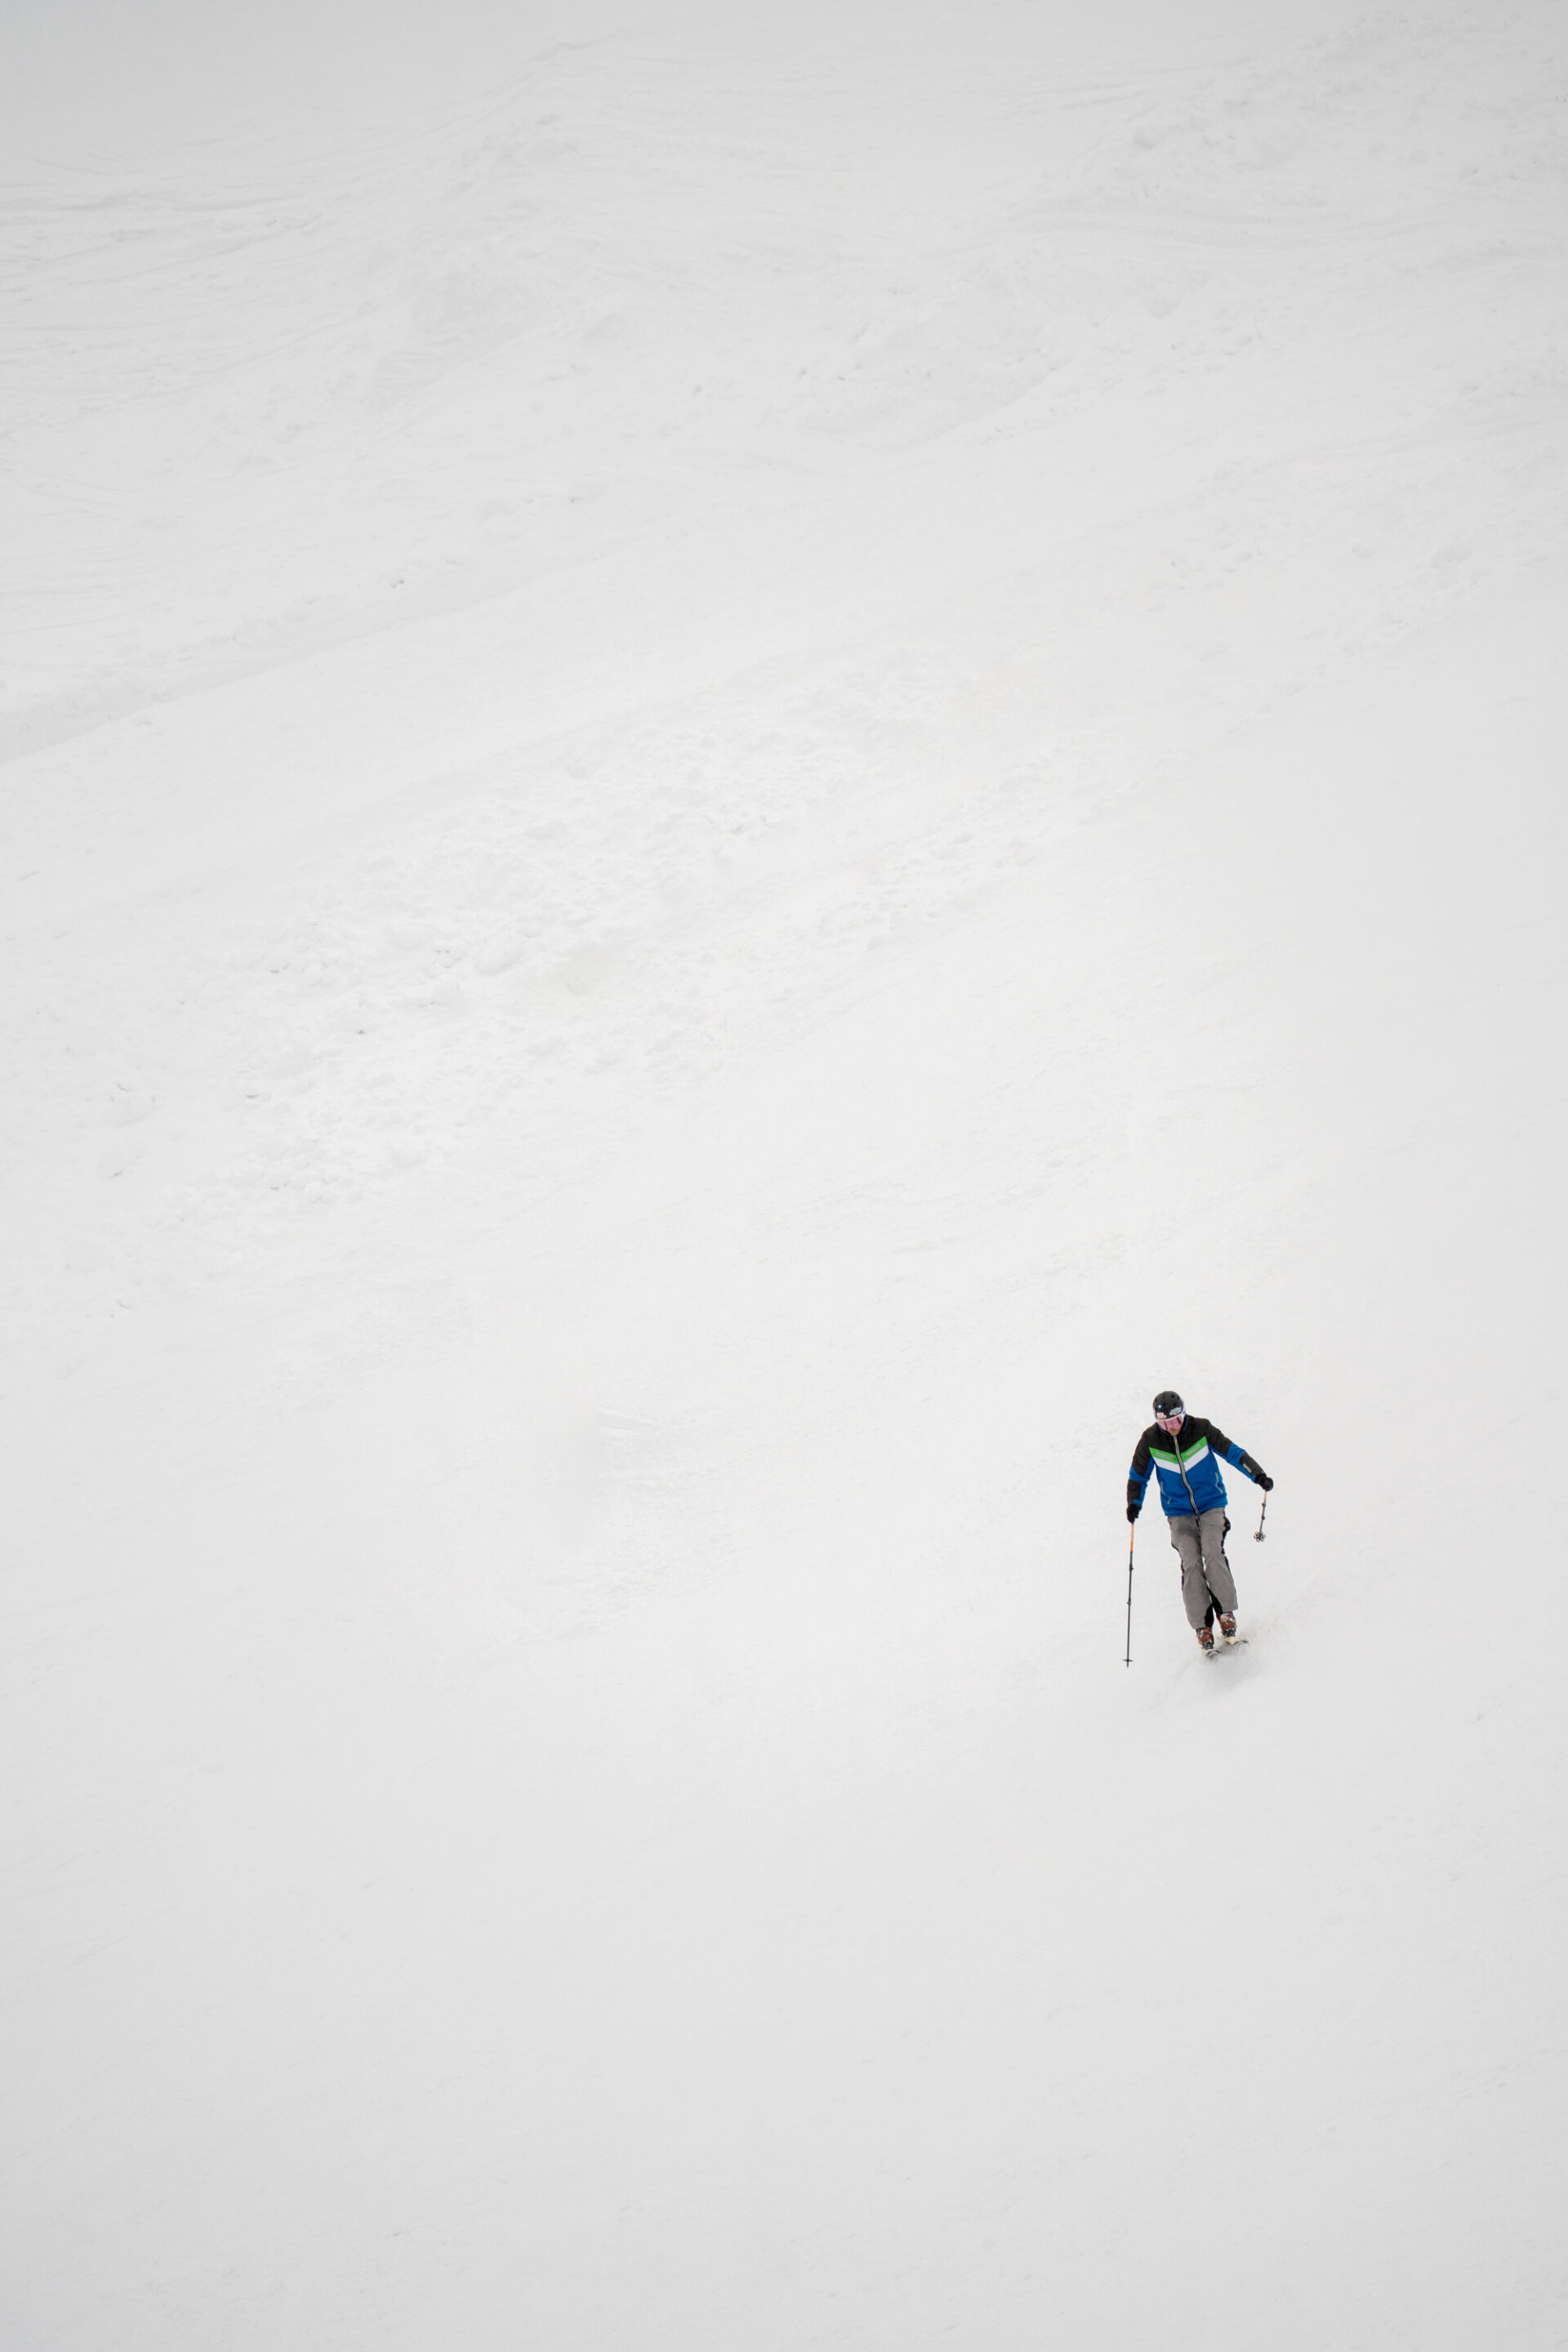 Skier descending the snowy slopes of the Polish Tatra Mountains